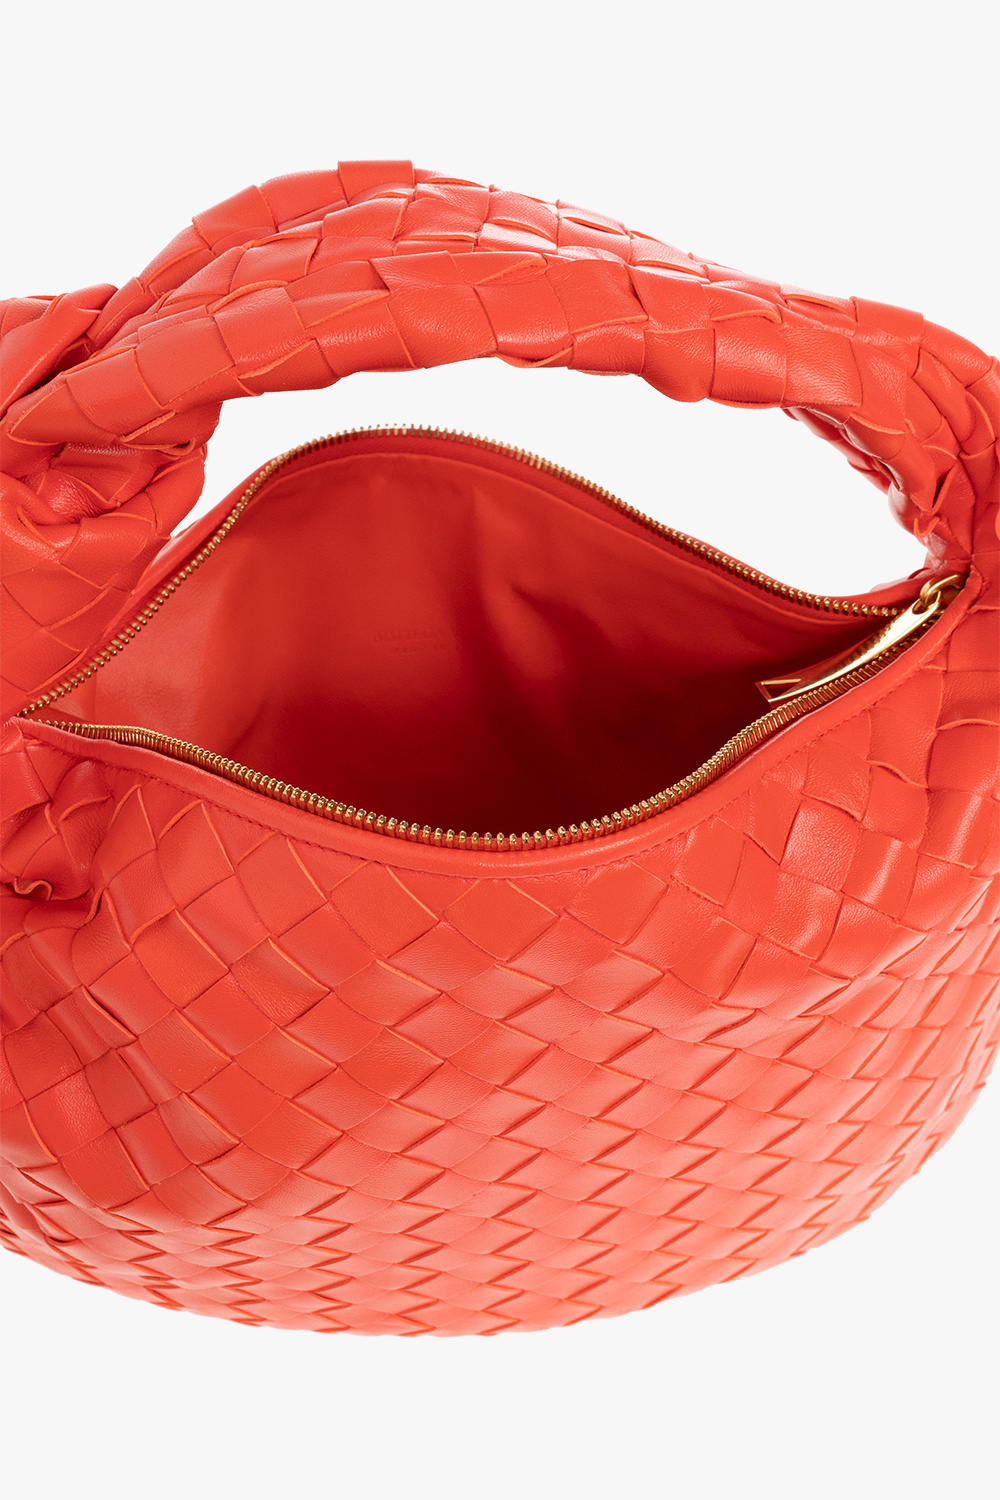 Bottega Veneta ‘Jodie’ handbag